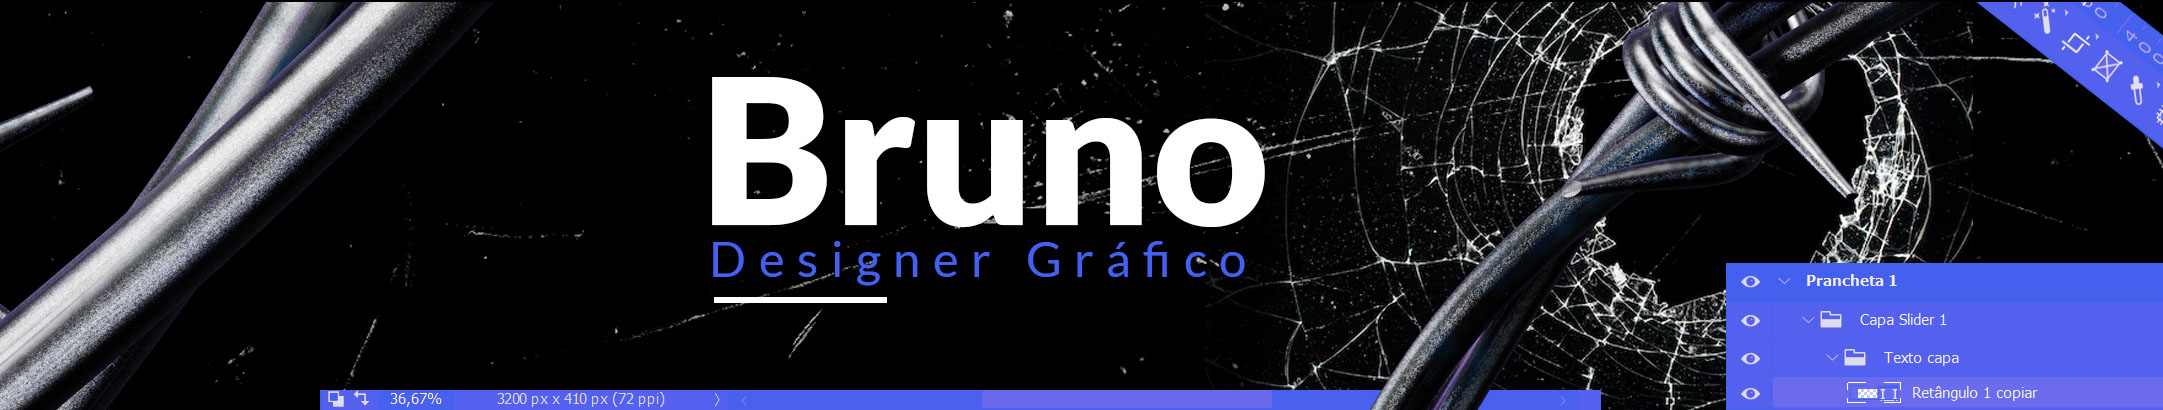 Bruno Santana profil başlığı